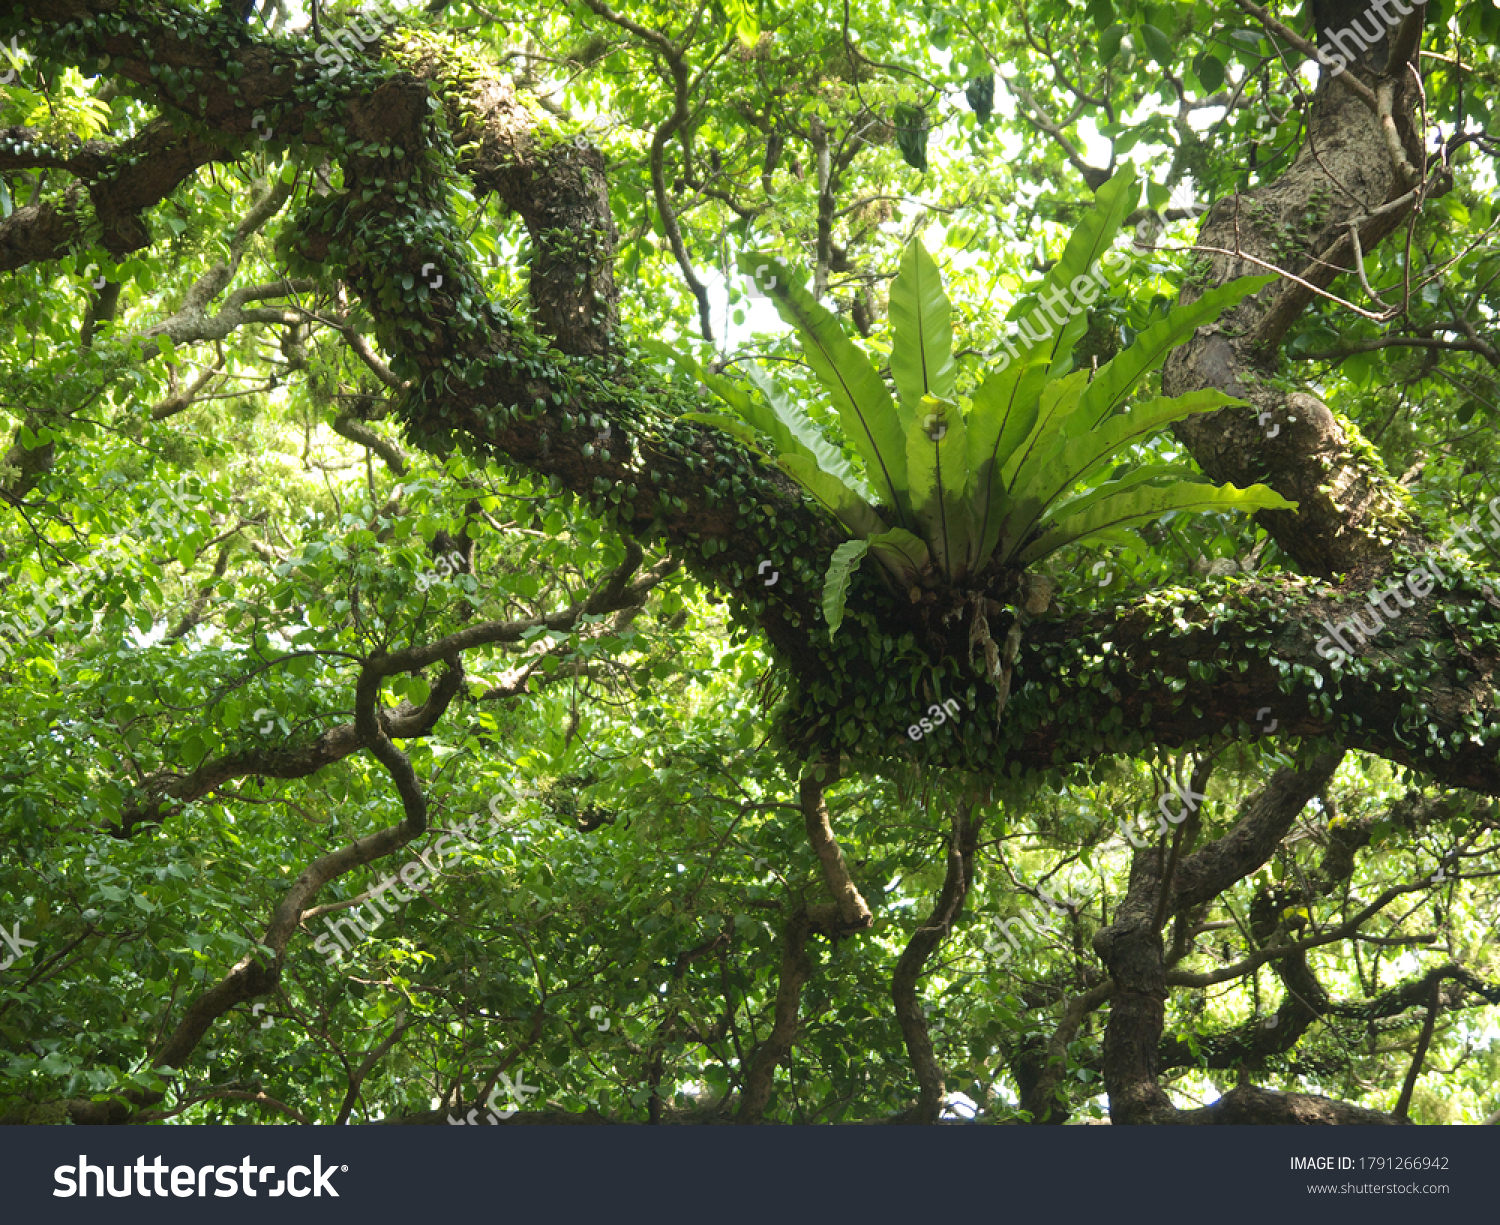 Asplenium nidus, bird's-nest Epiphyte fern plant growing on big tree branch in lush green jungles #1791266942